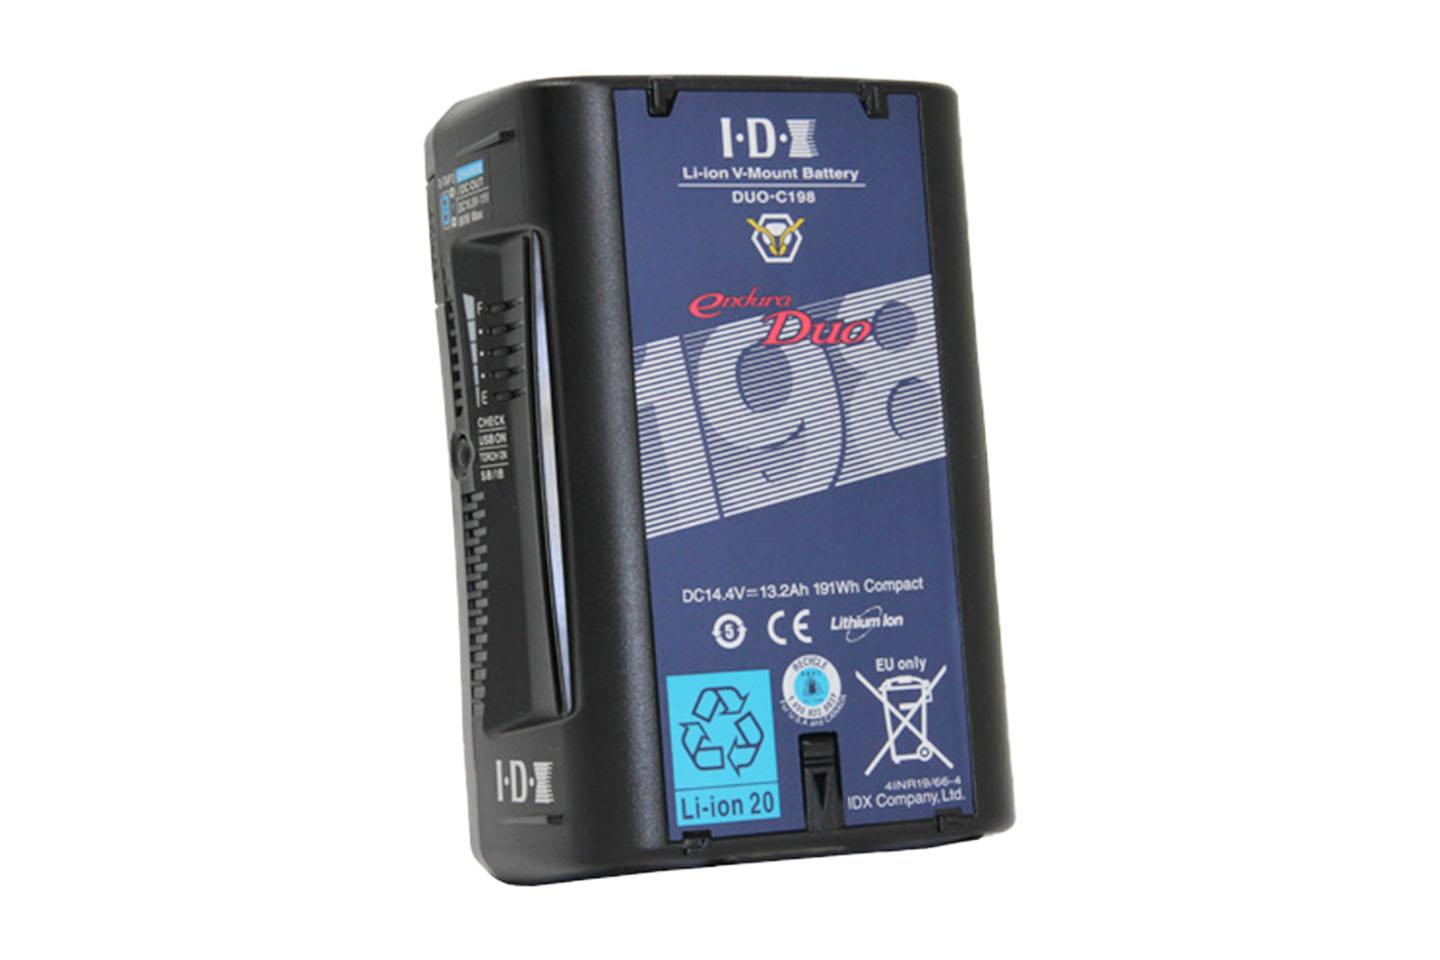 IDX DUO-C198(Vマウントバッテリー)